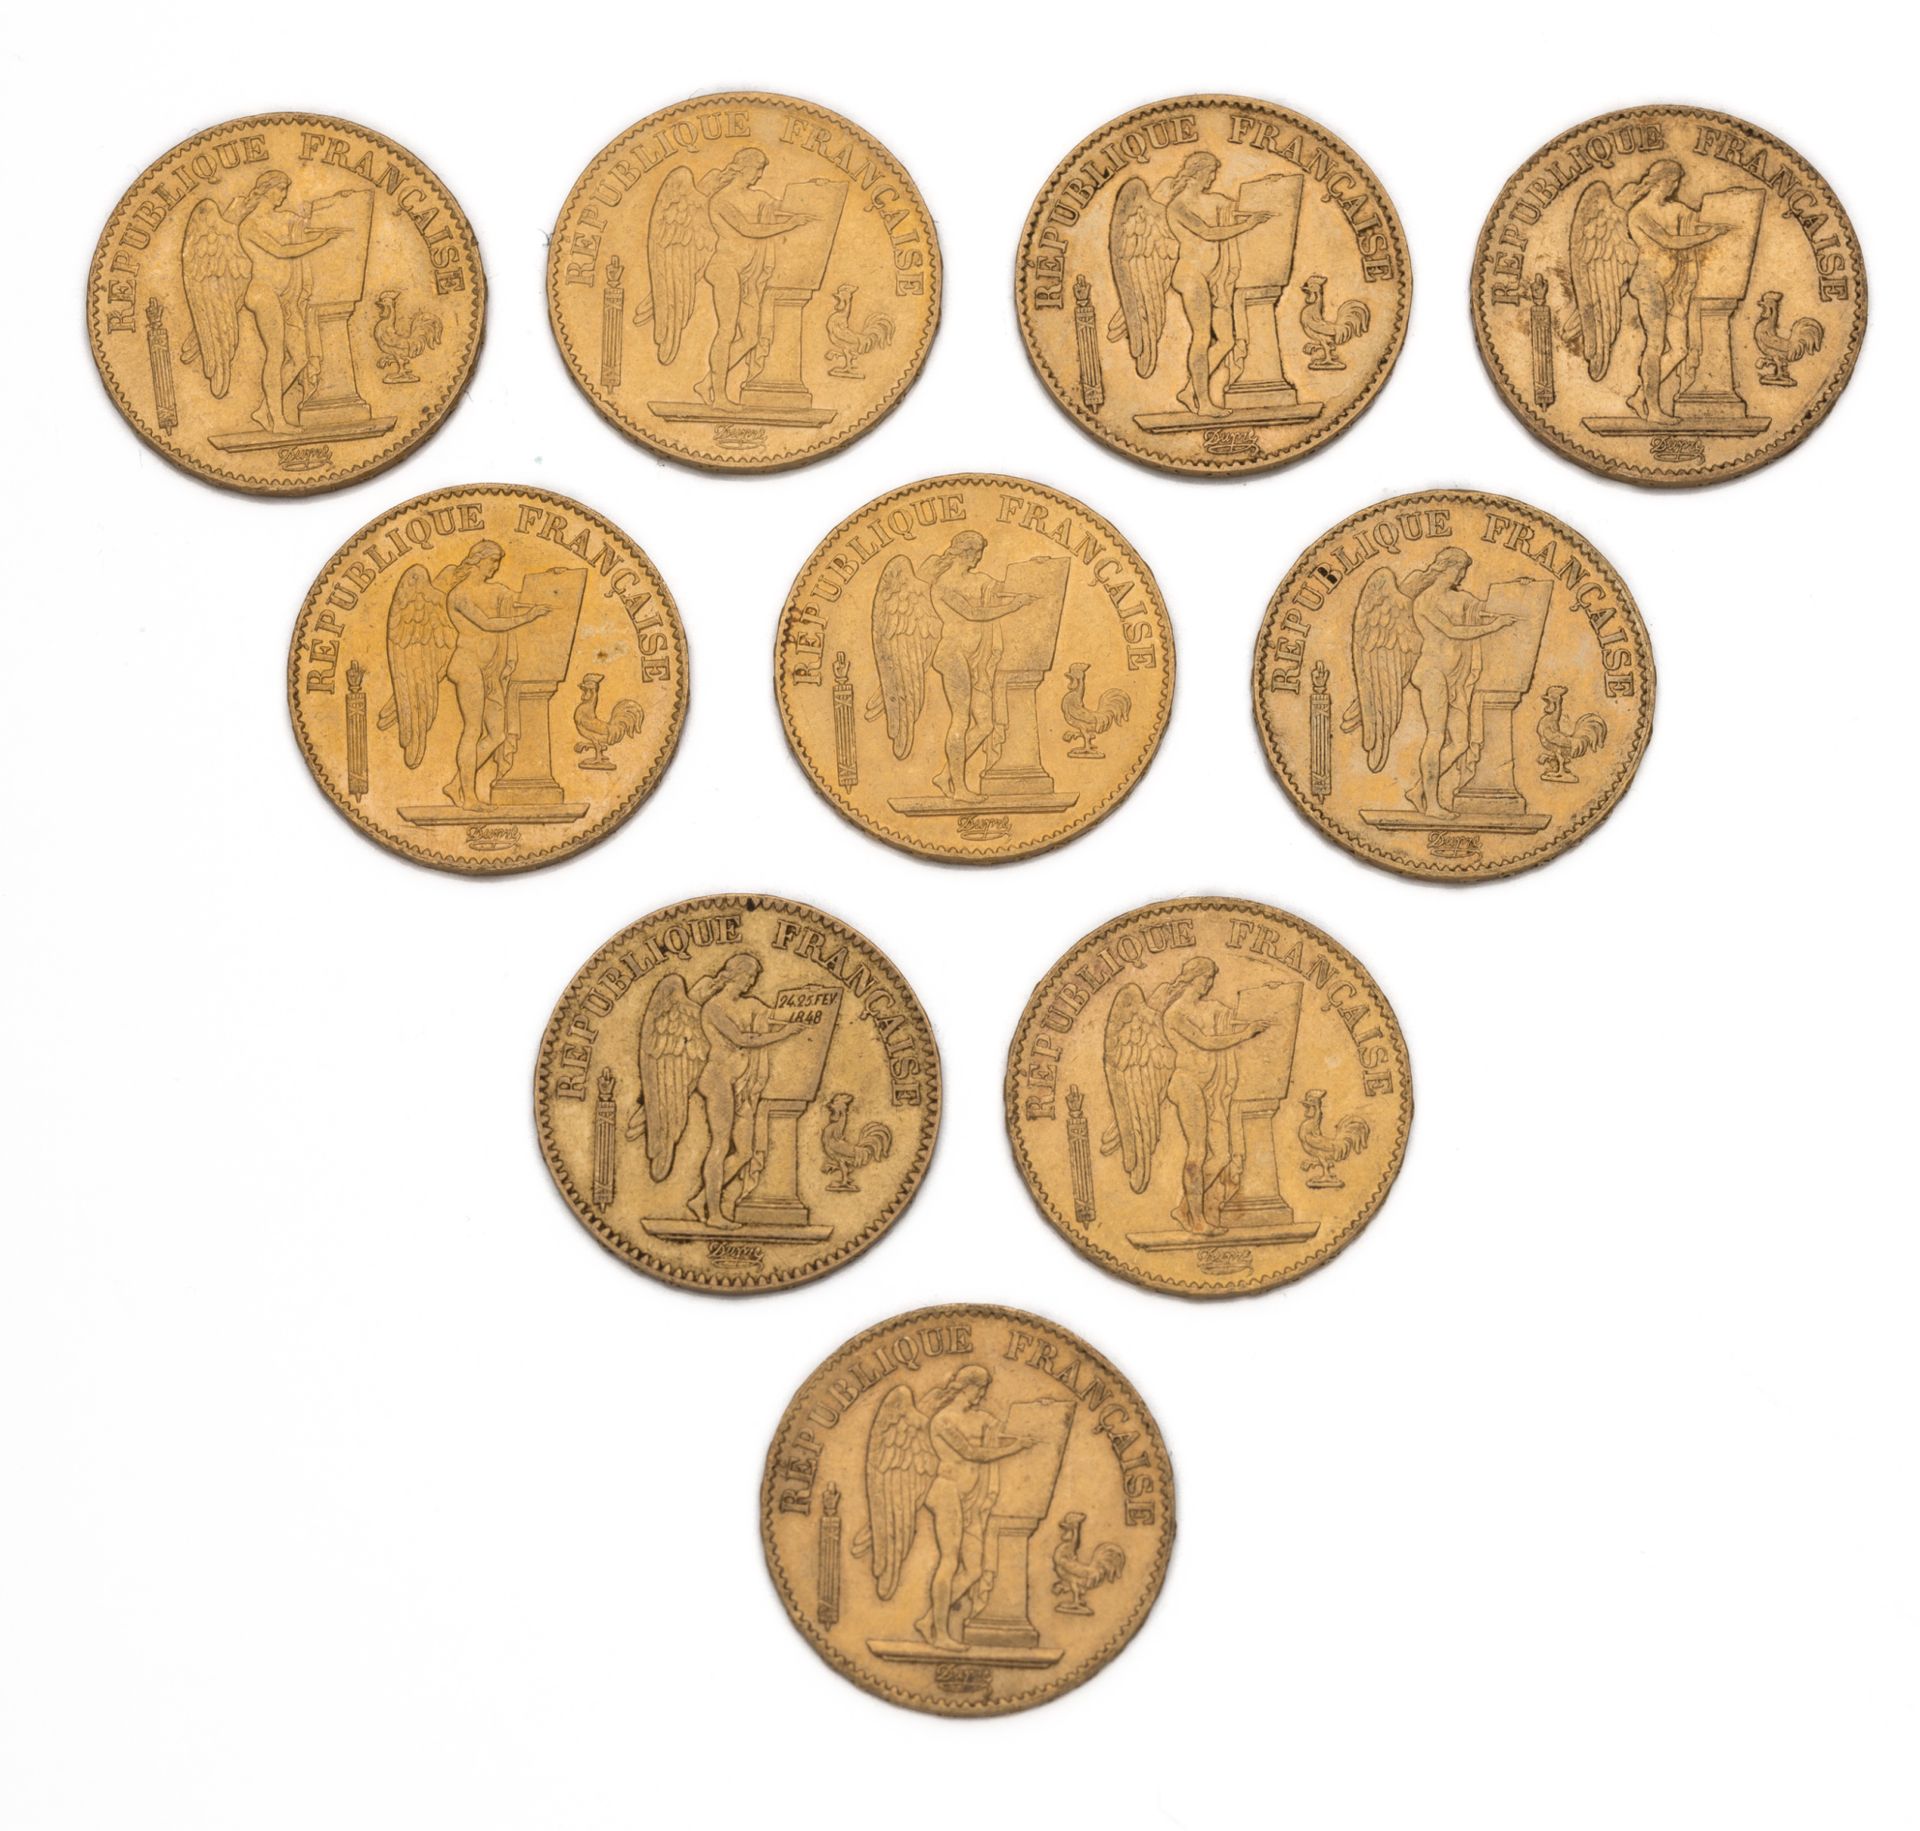 Null IIIª REPÚBLICA
20 francos oro, Genie. 1848 / 1875 (3 ex) / 1876 (2 ex) / 18&hellip;